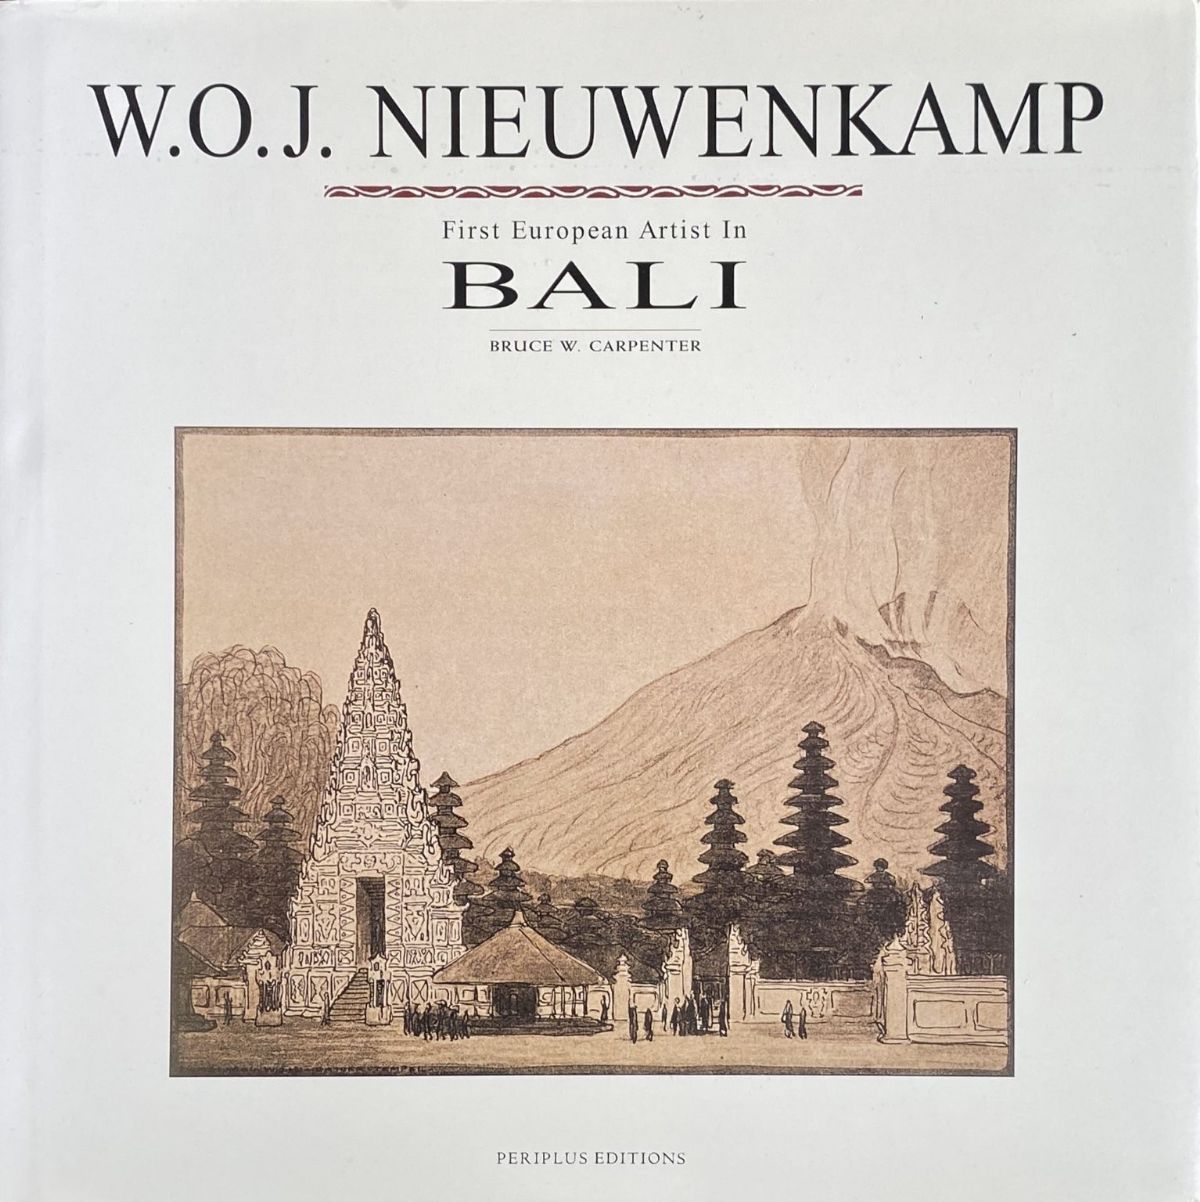 W.O.J. NIEUWENKAMP: First European Artist In Bali